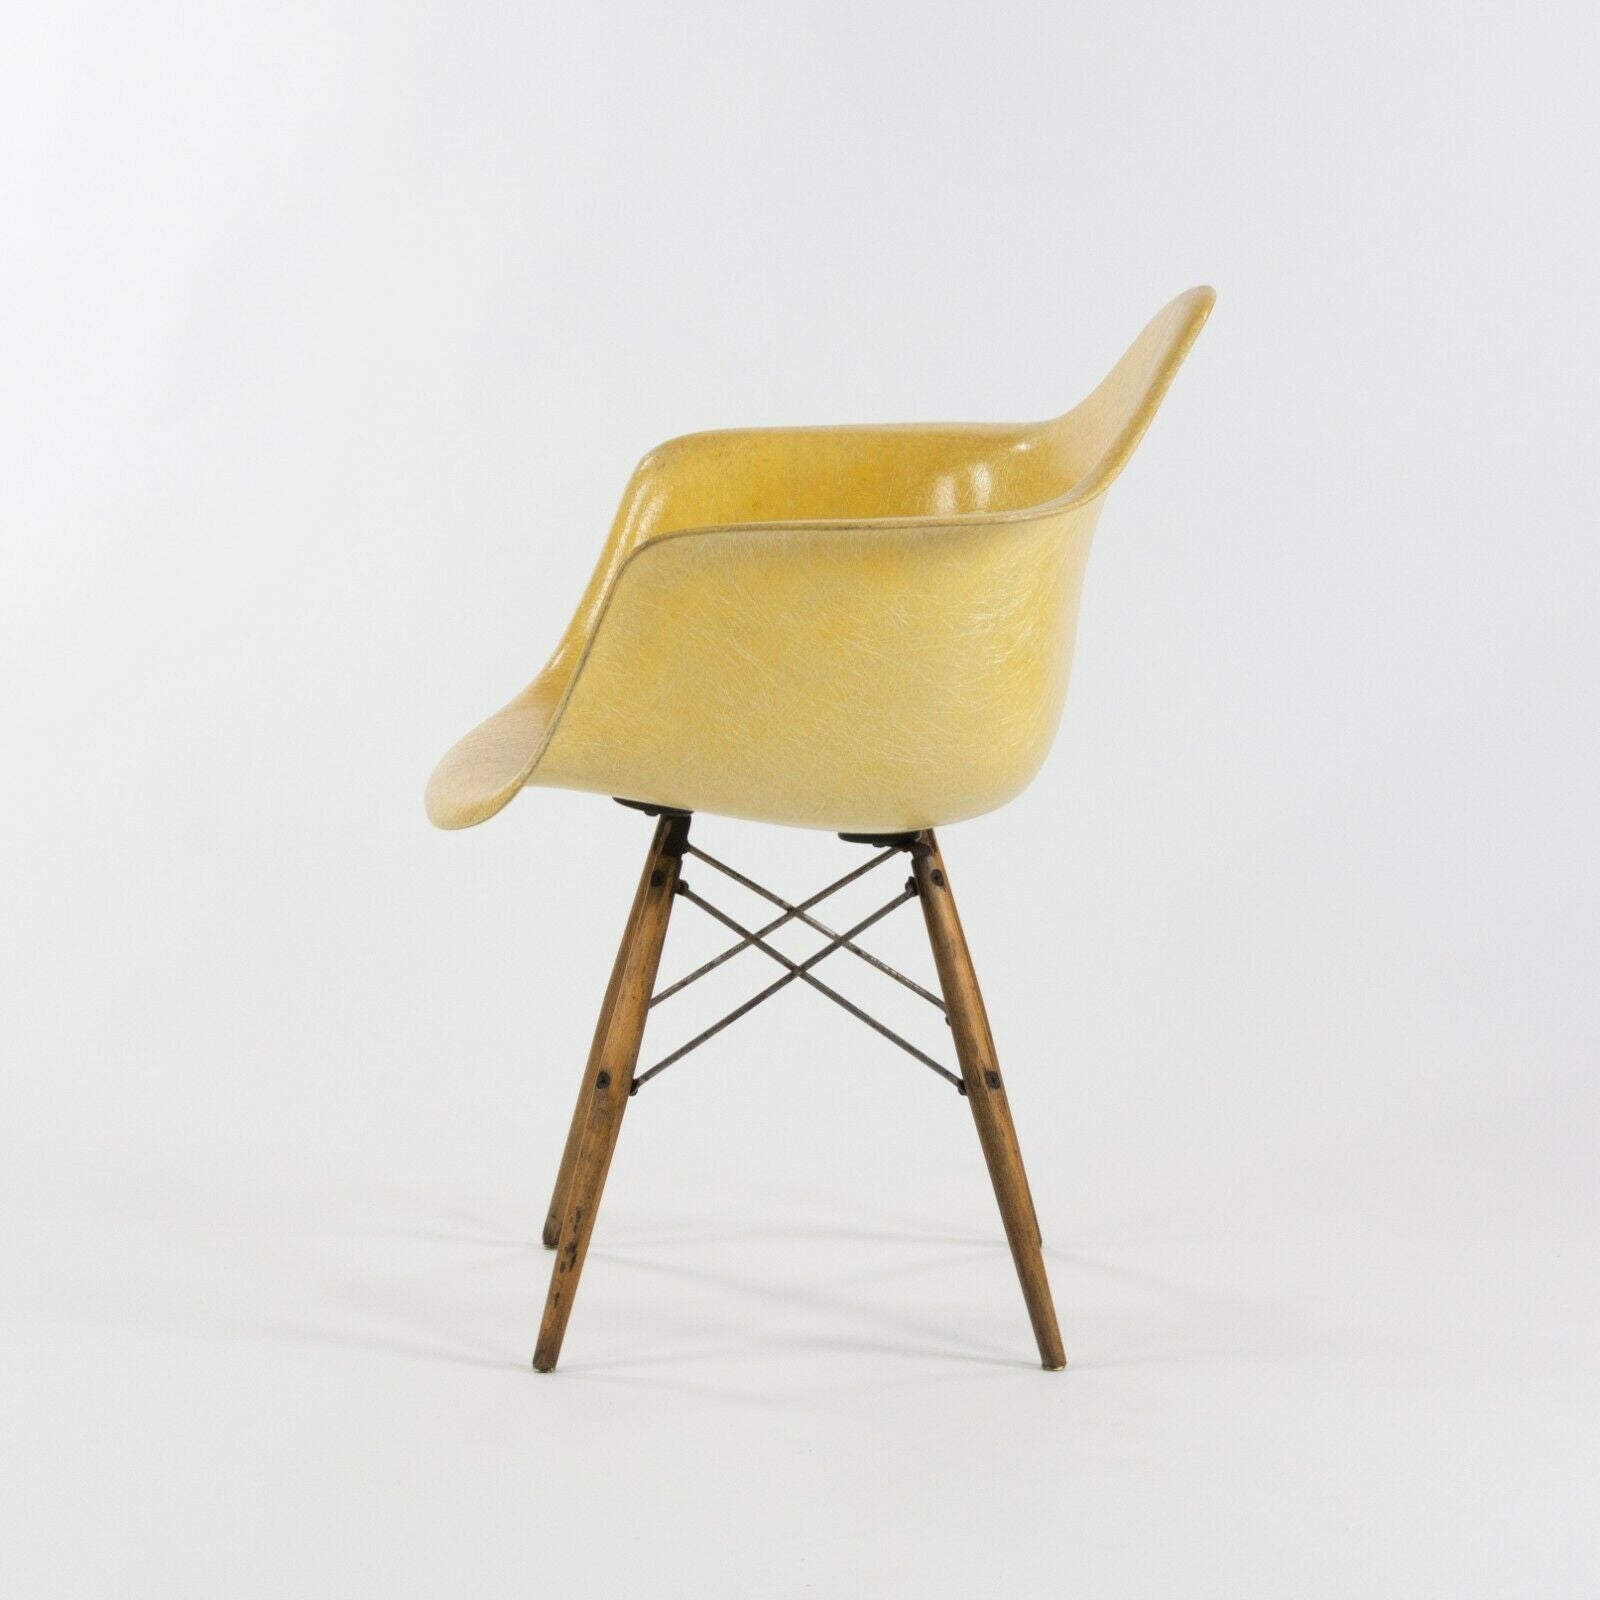 SOLD 1951 Herman Miller Eames Zenith DAW Lemon Yellow Arm Shell Chair w Dowel & Rope Edge